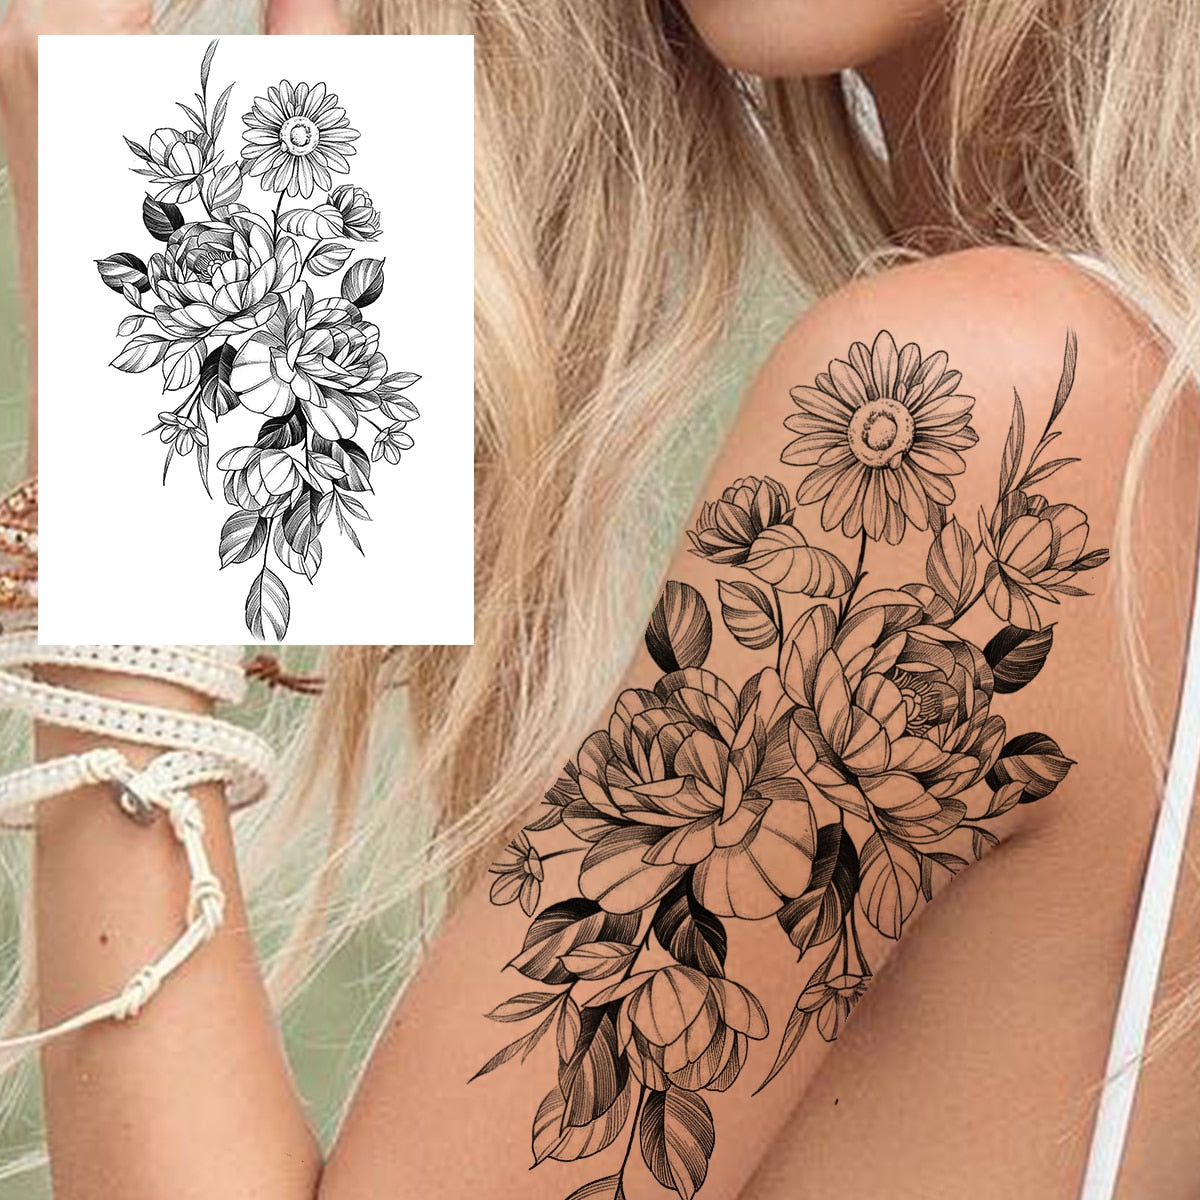 Sexy Flower Tatt